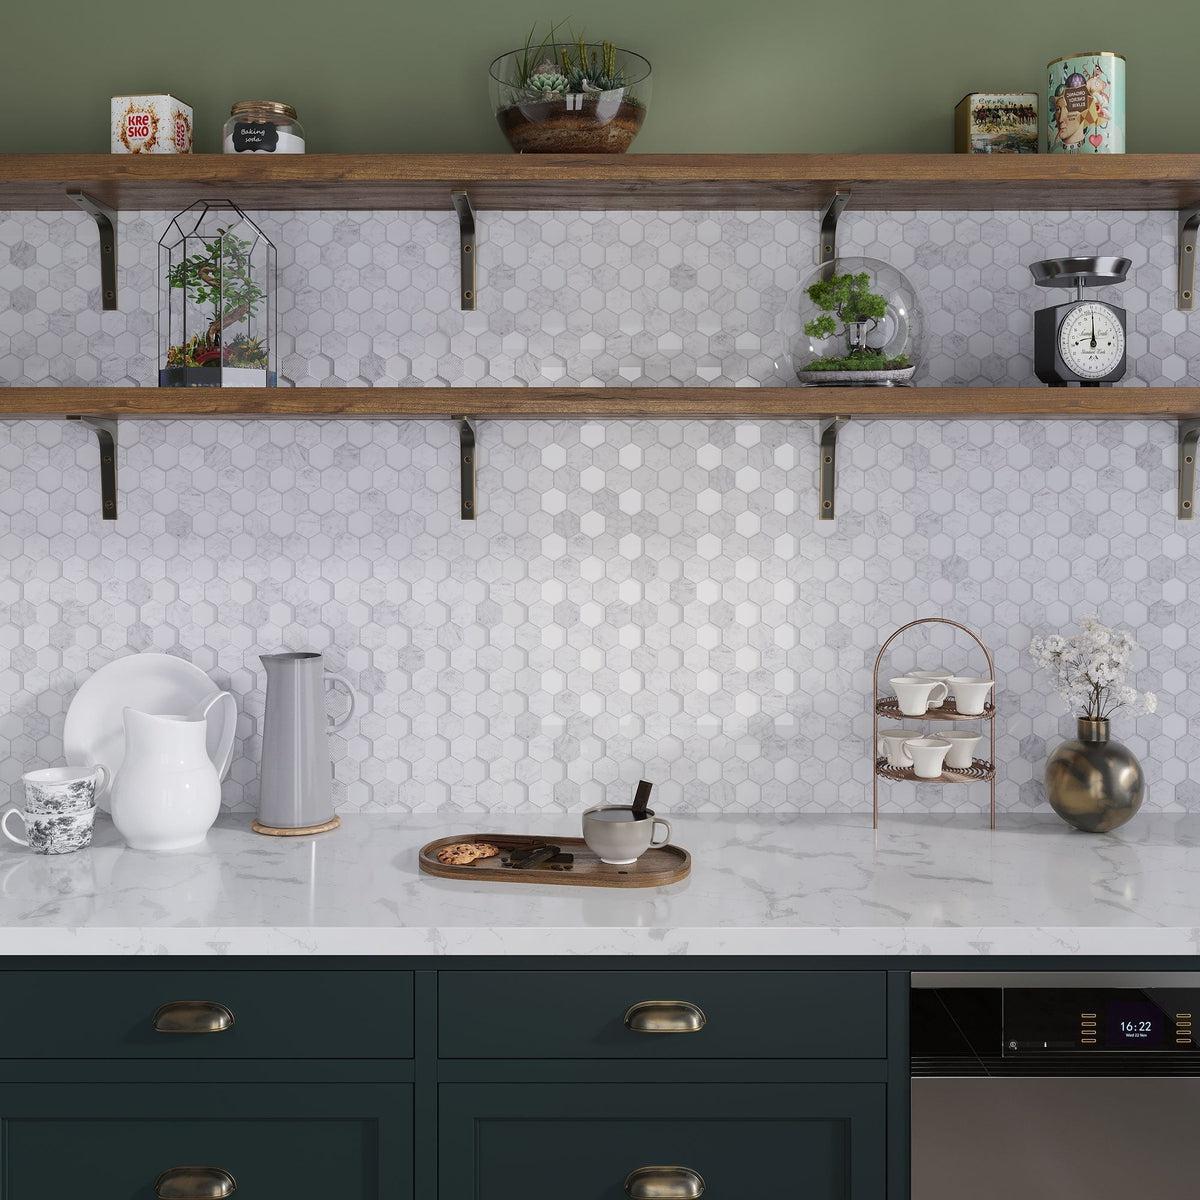 Green & Wood Kitchen with Textured Carrara And Glass Hexagon Mosaic Backsplash